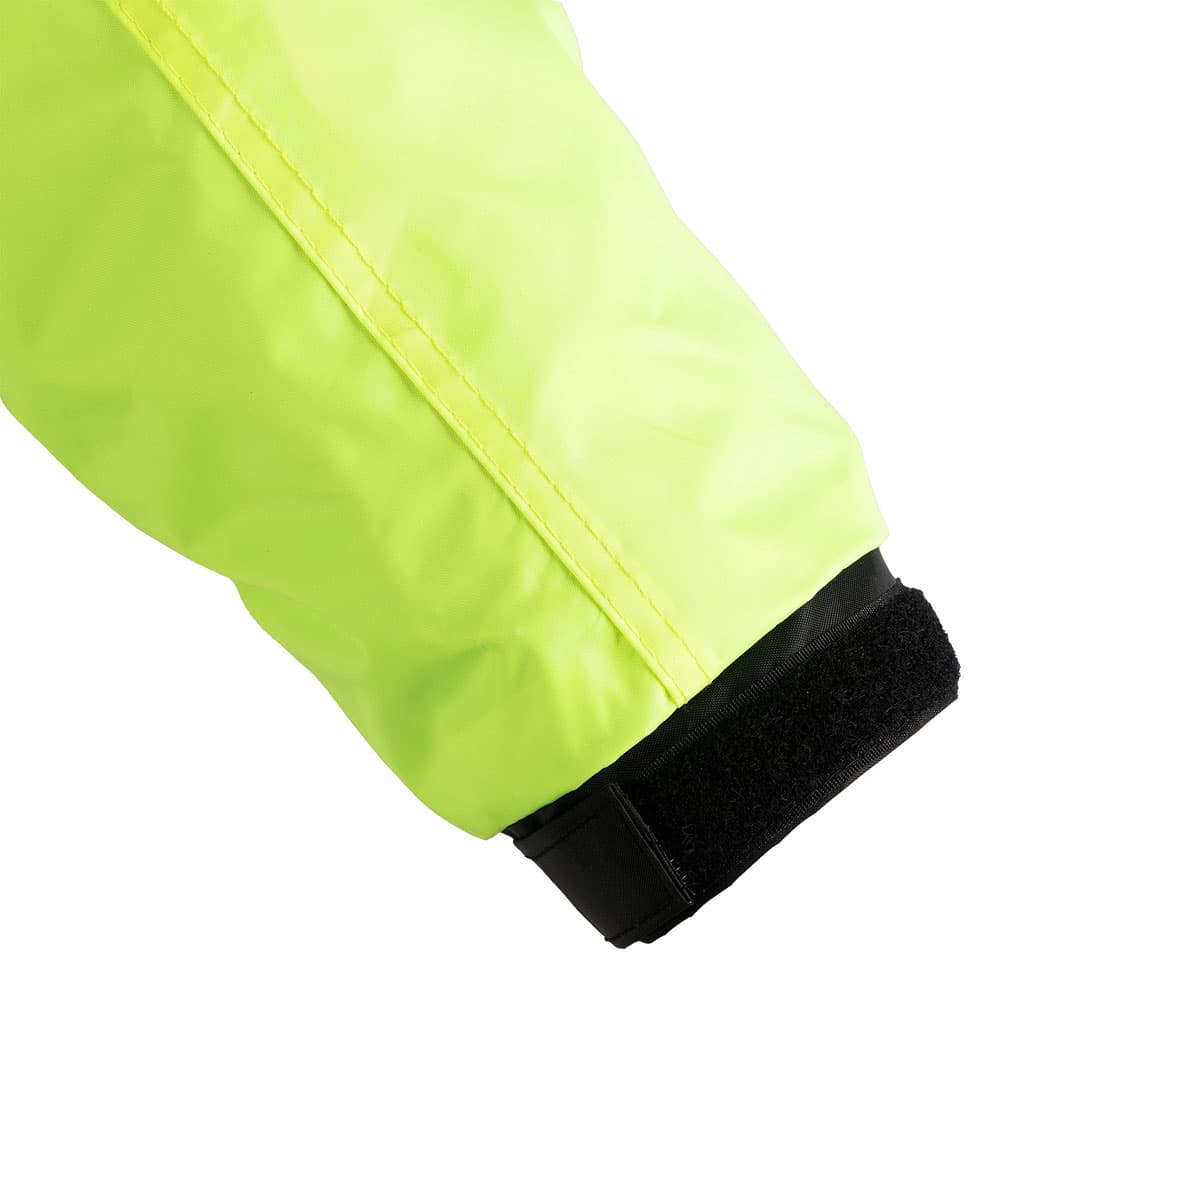 Oxford Rainseal Over Suit WP - Black/Fluo wrist detail